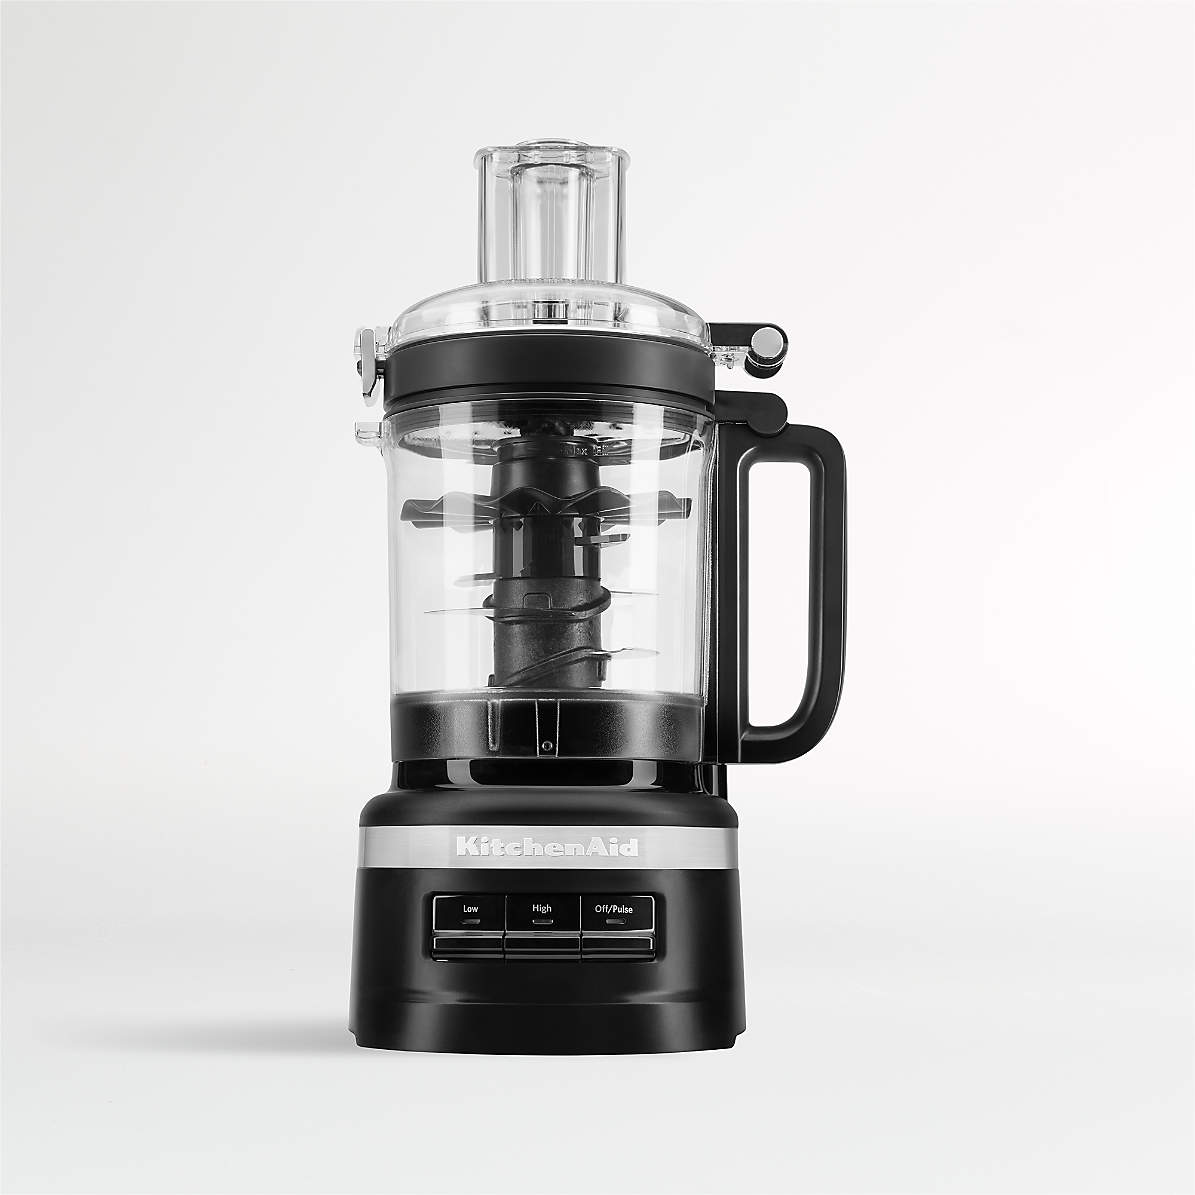 KitchenAid launched a new Mini Food Processor - Home Appliances World